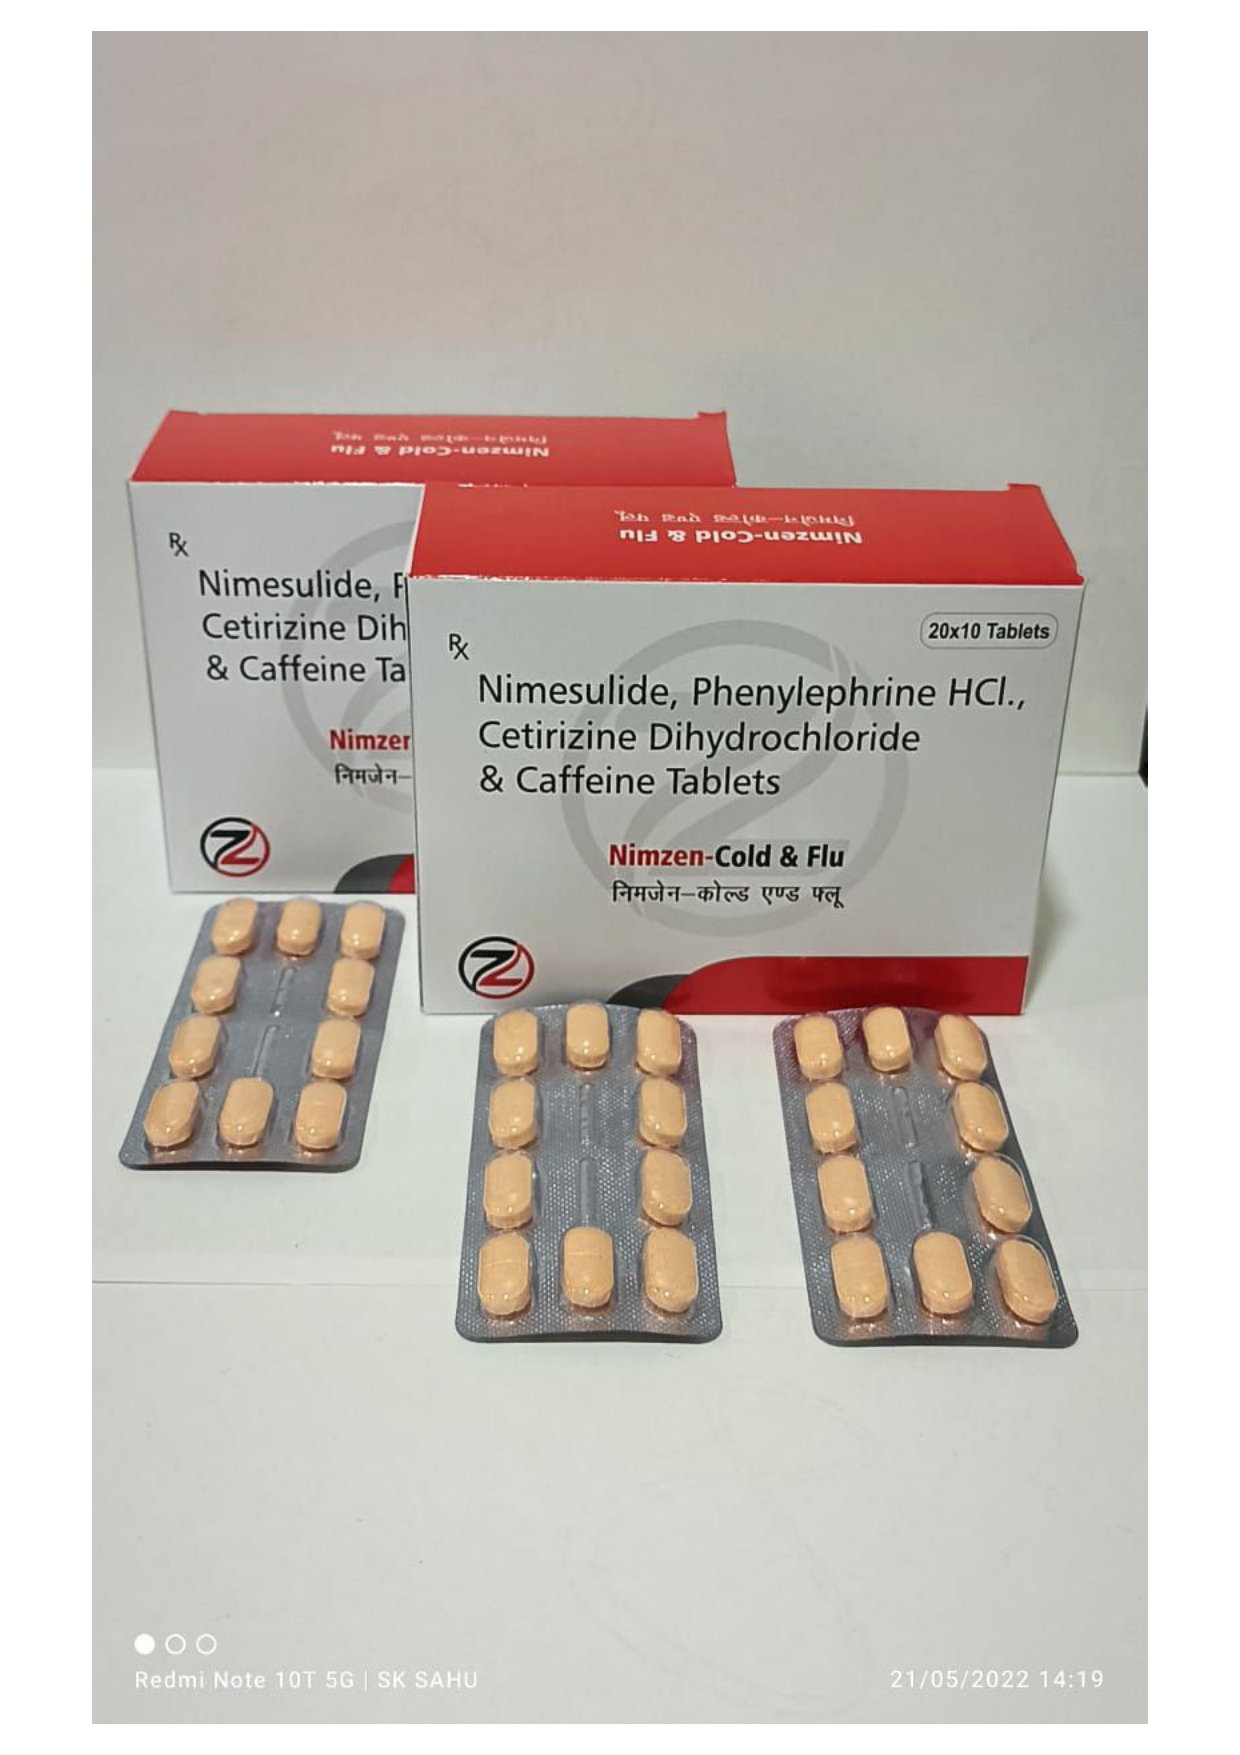 nimesulide 100mg + cetrizine 5 mg+ phenylphrine hydrochloride 10mg + caffeine
30mg tablet